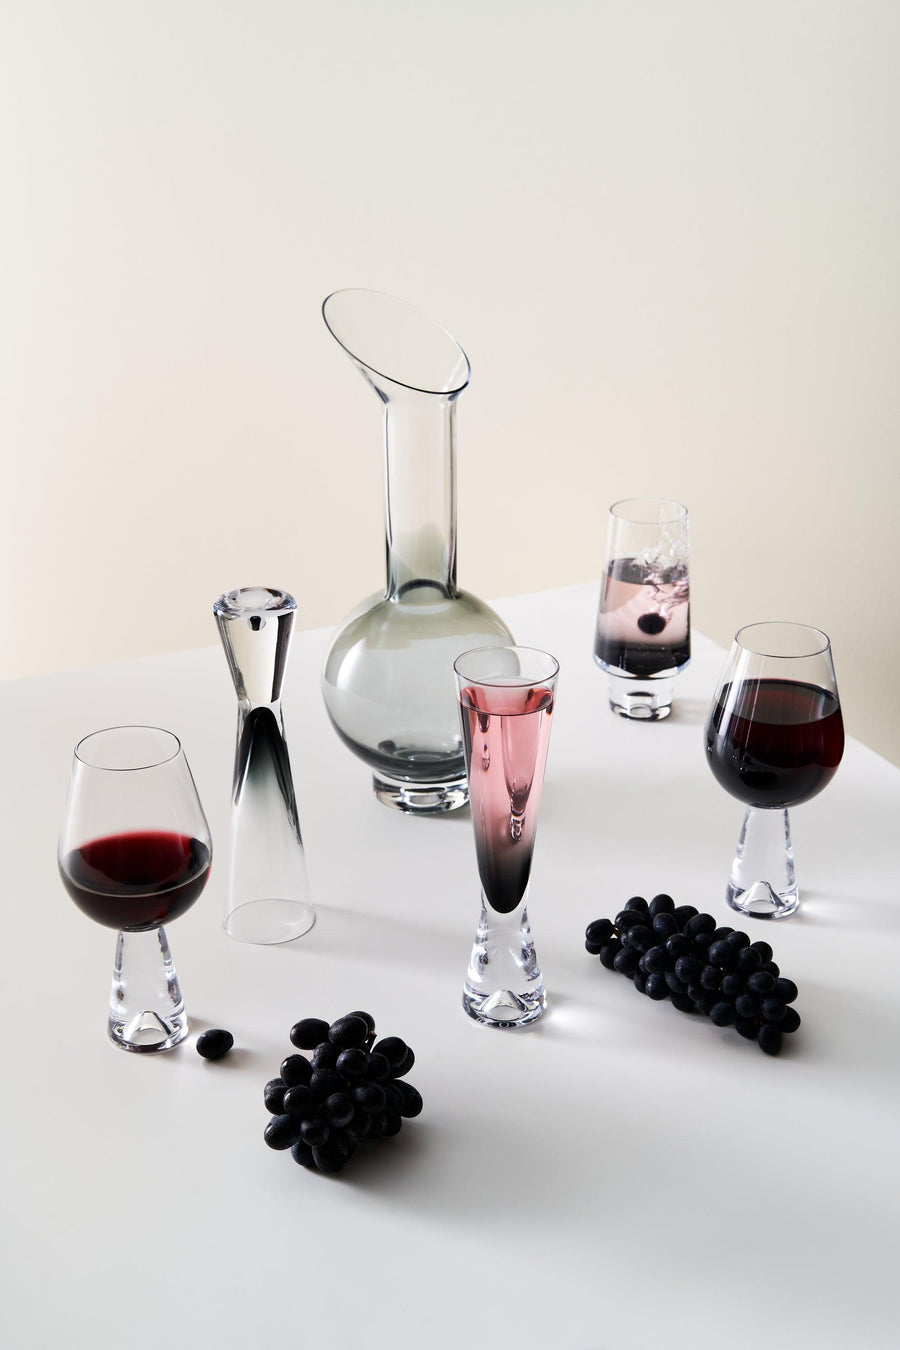 Tank Champagne Glasses-Black (Set of 2) - Maison Vogue